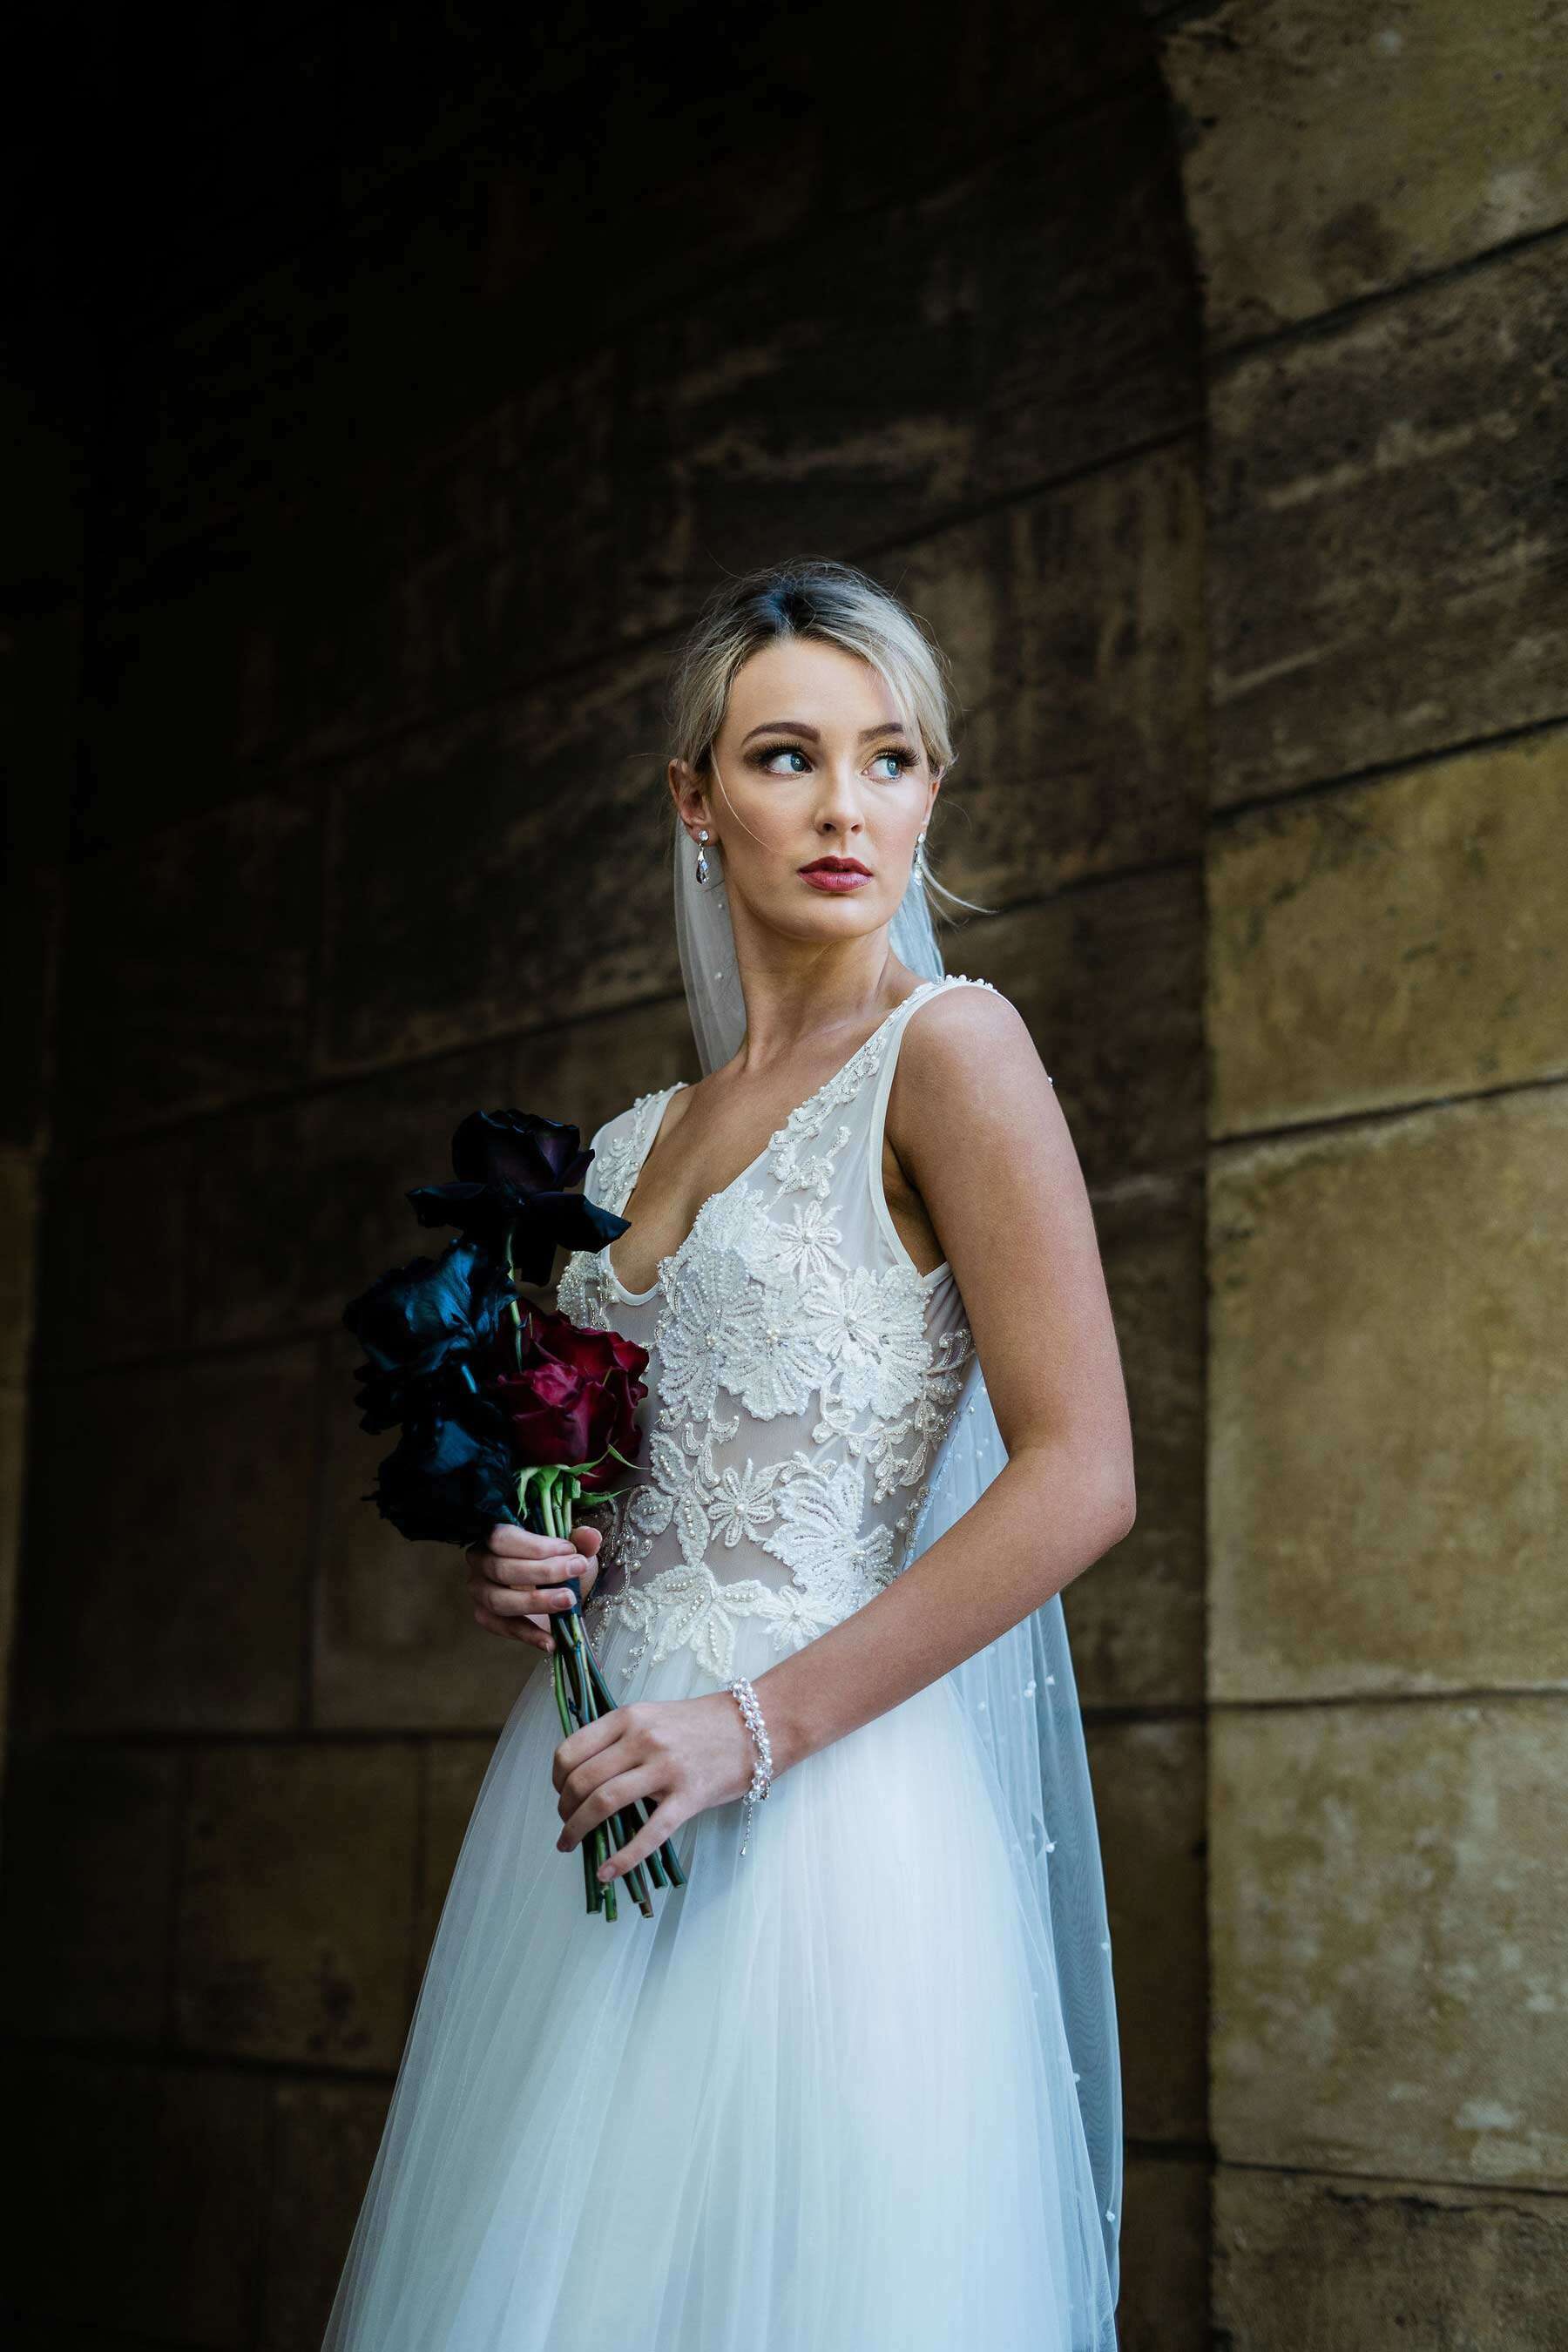 Perth's best boutique bridal fair - Wedding Upmarket 2019